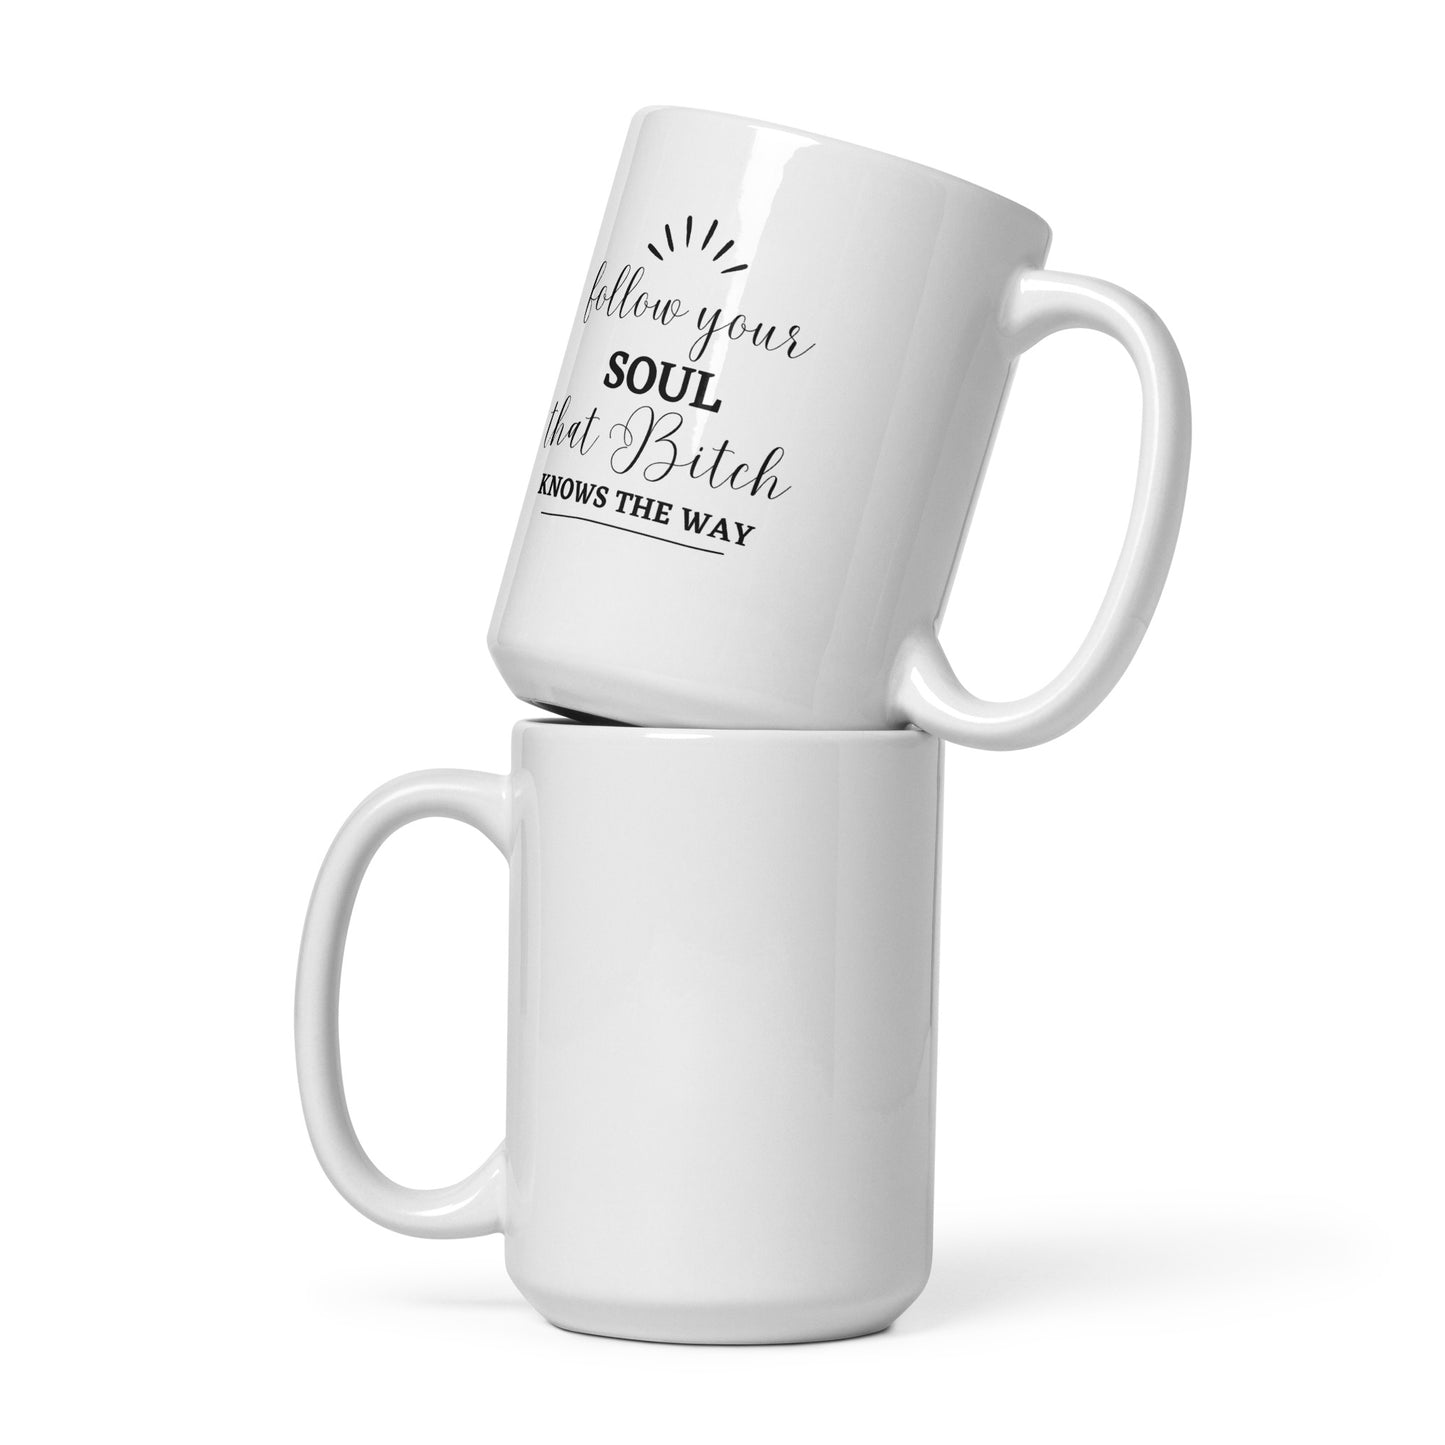 Follow Your Soul - White glossy mug